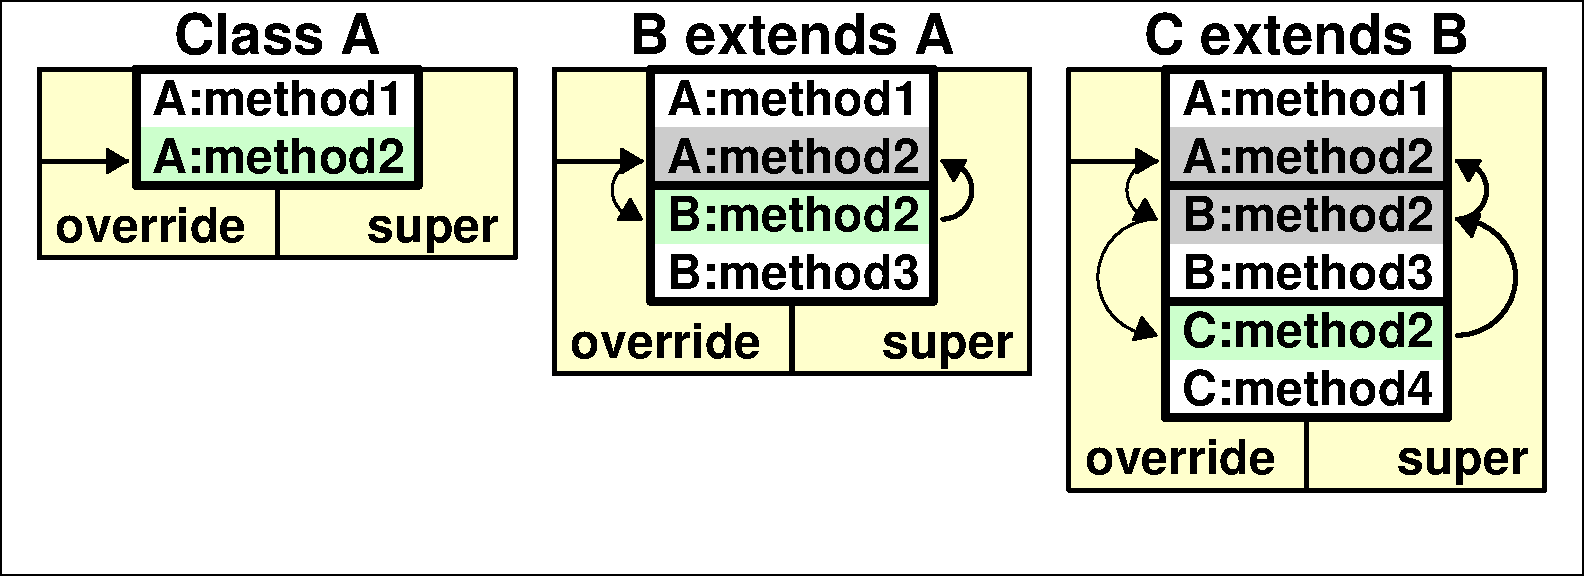 Object C extends B